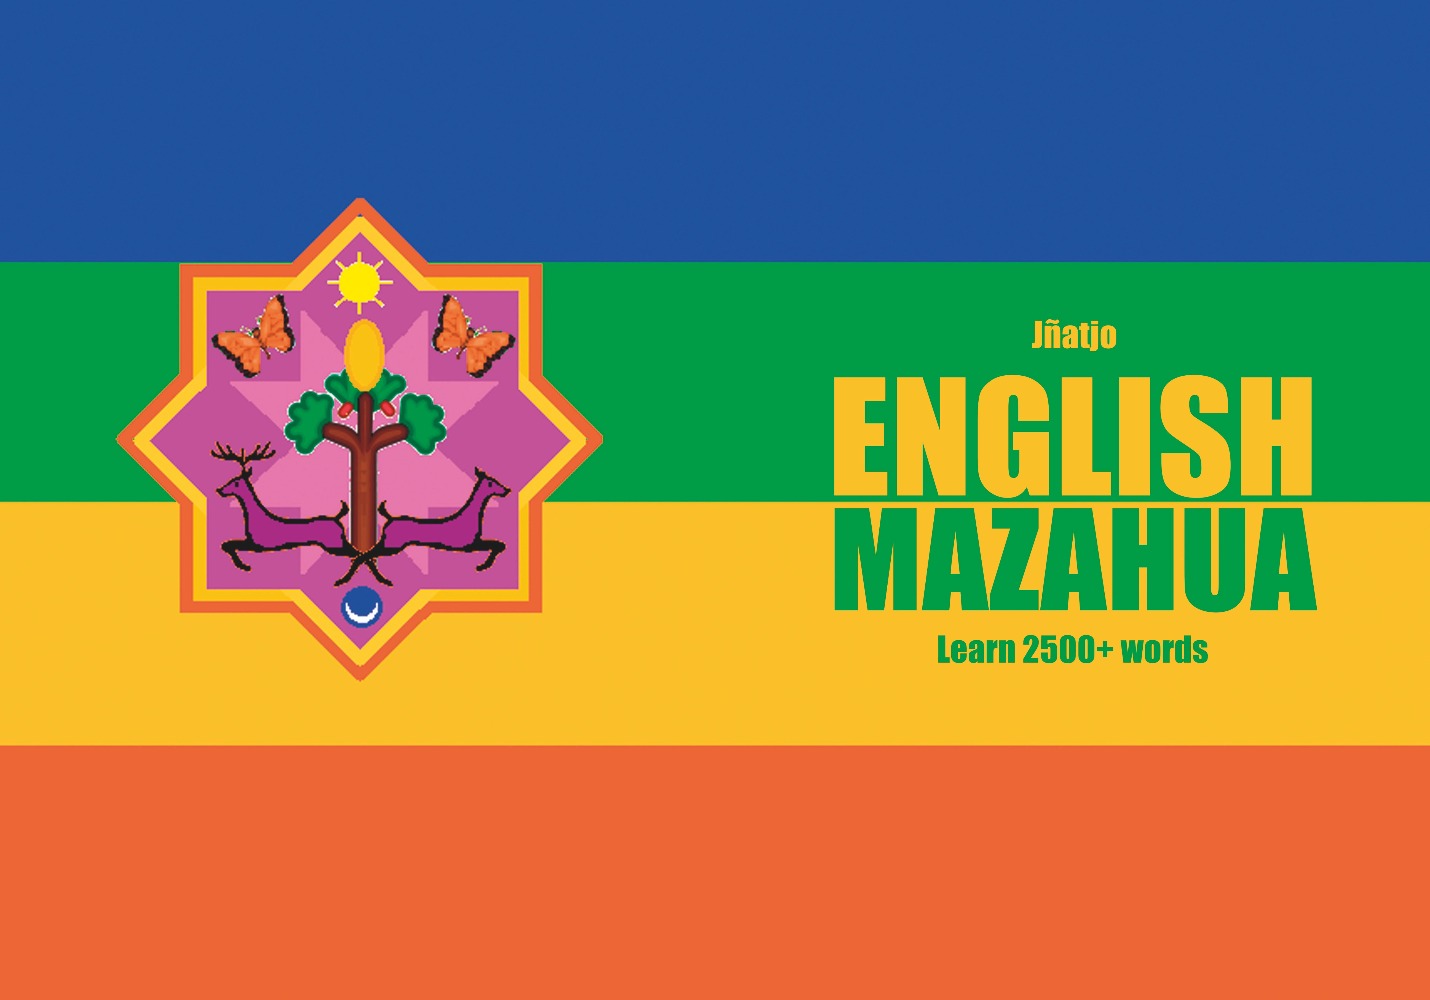 Mazahua language learning notebook cover